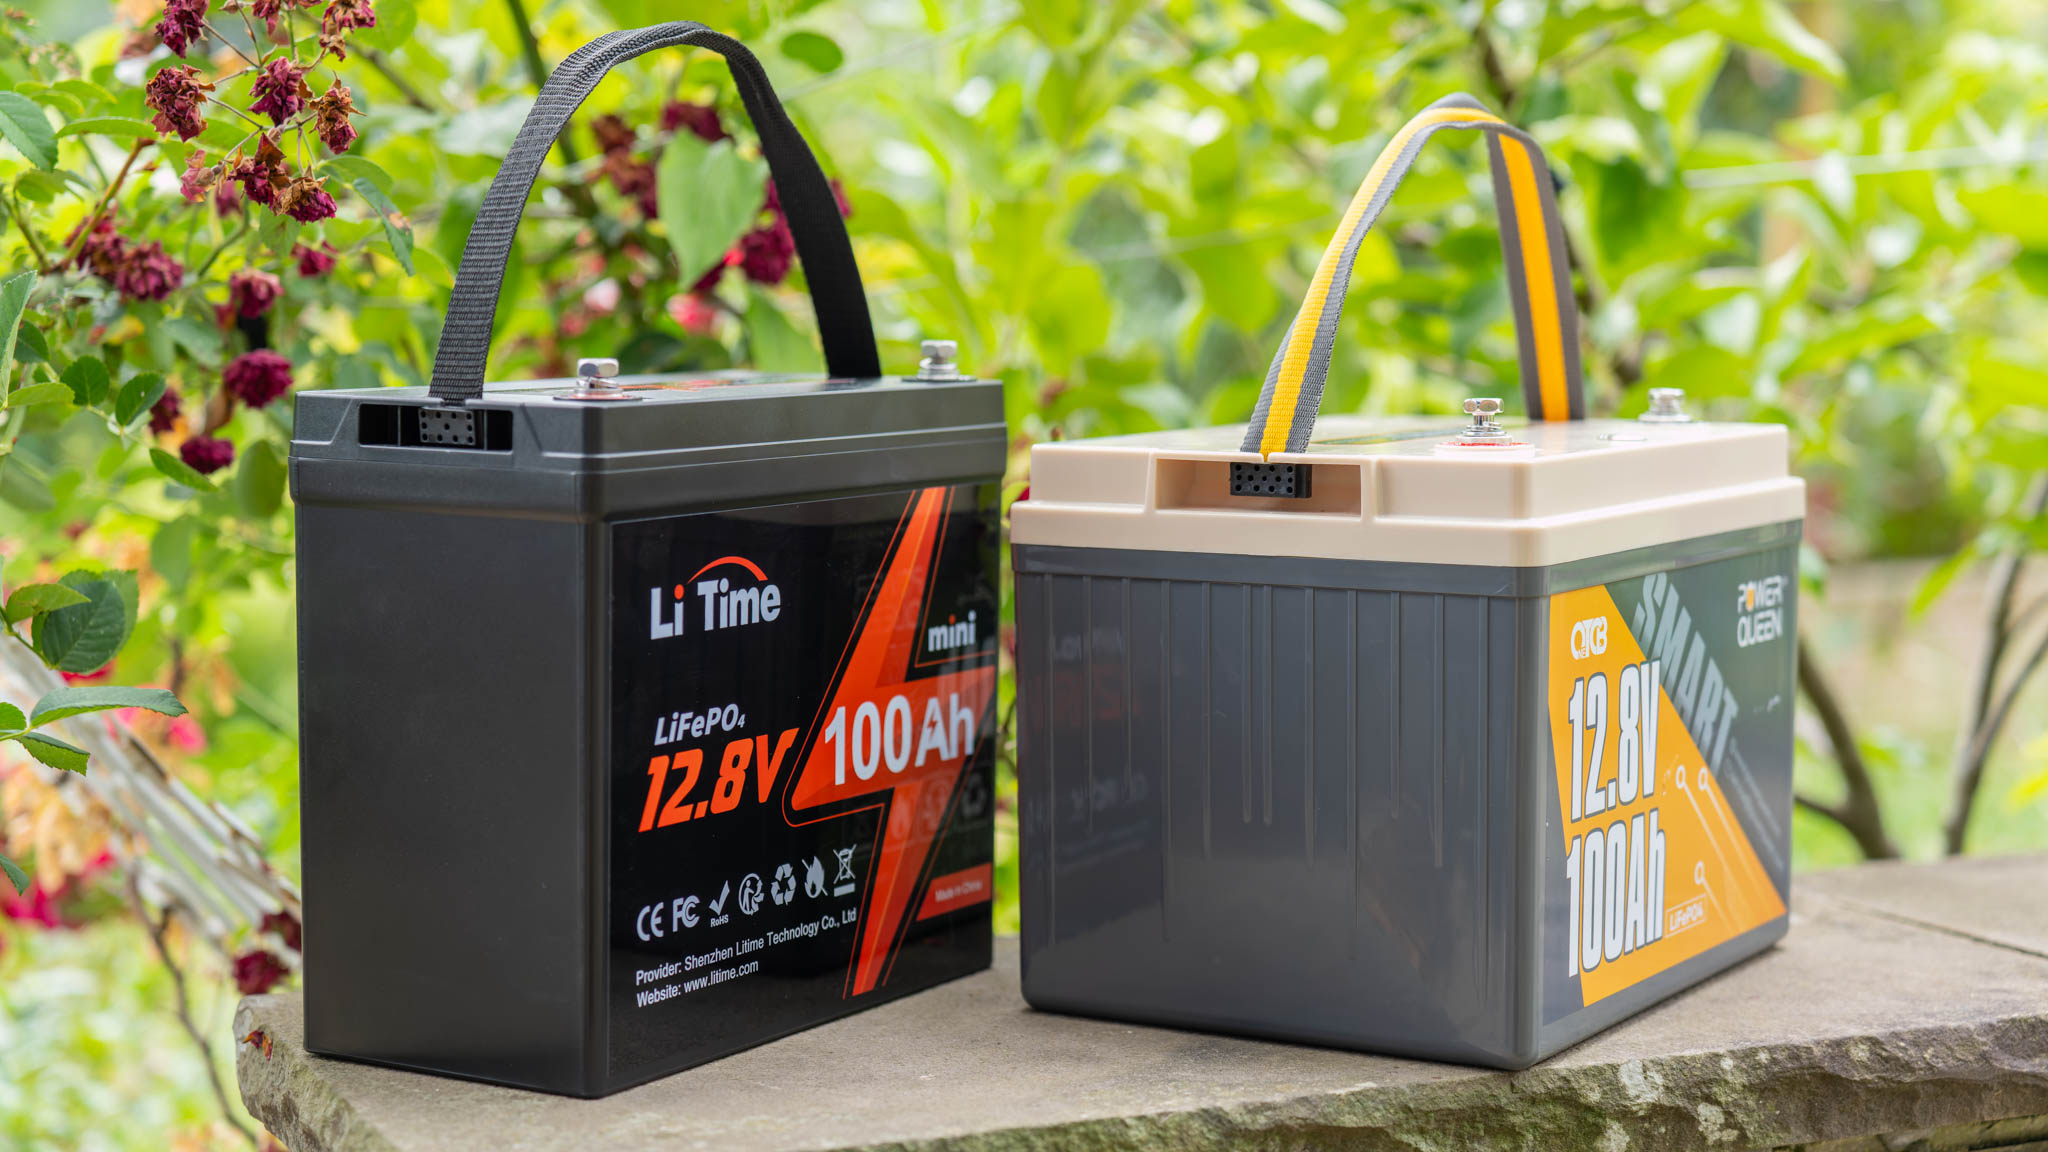 Redodo LiFePO4 12V 100Ah Mini Deep Cycle LiFePO4 Batterie | 1,28kWh & 1,28kW